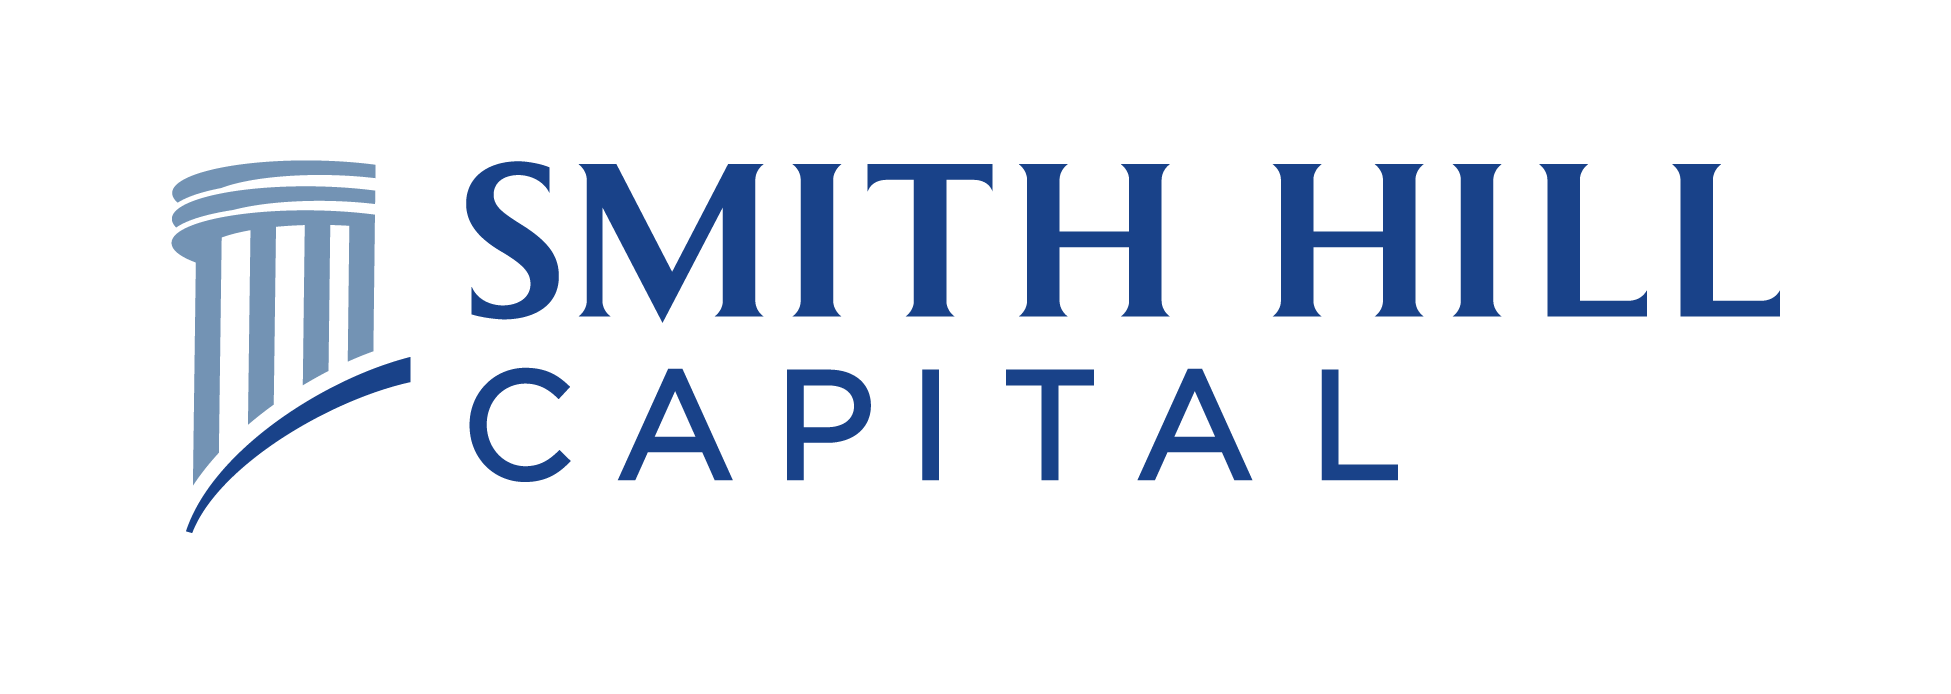 SMITH HILL CAPITAL